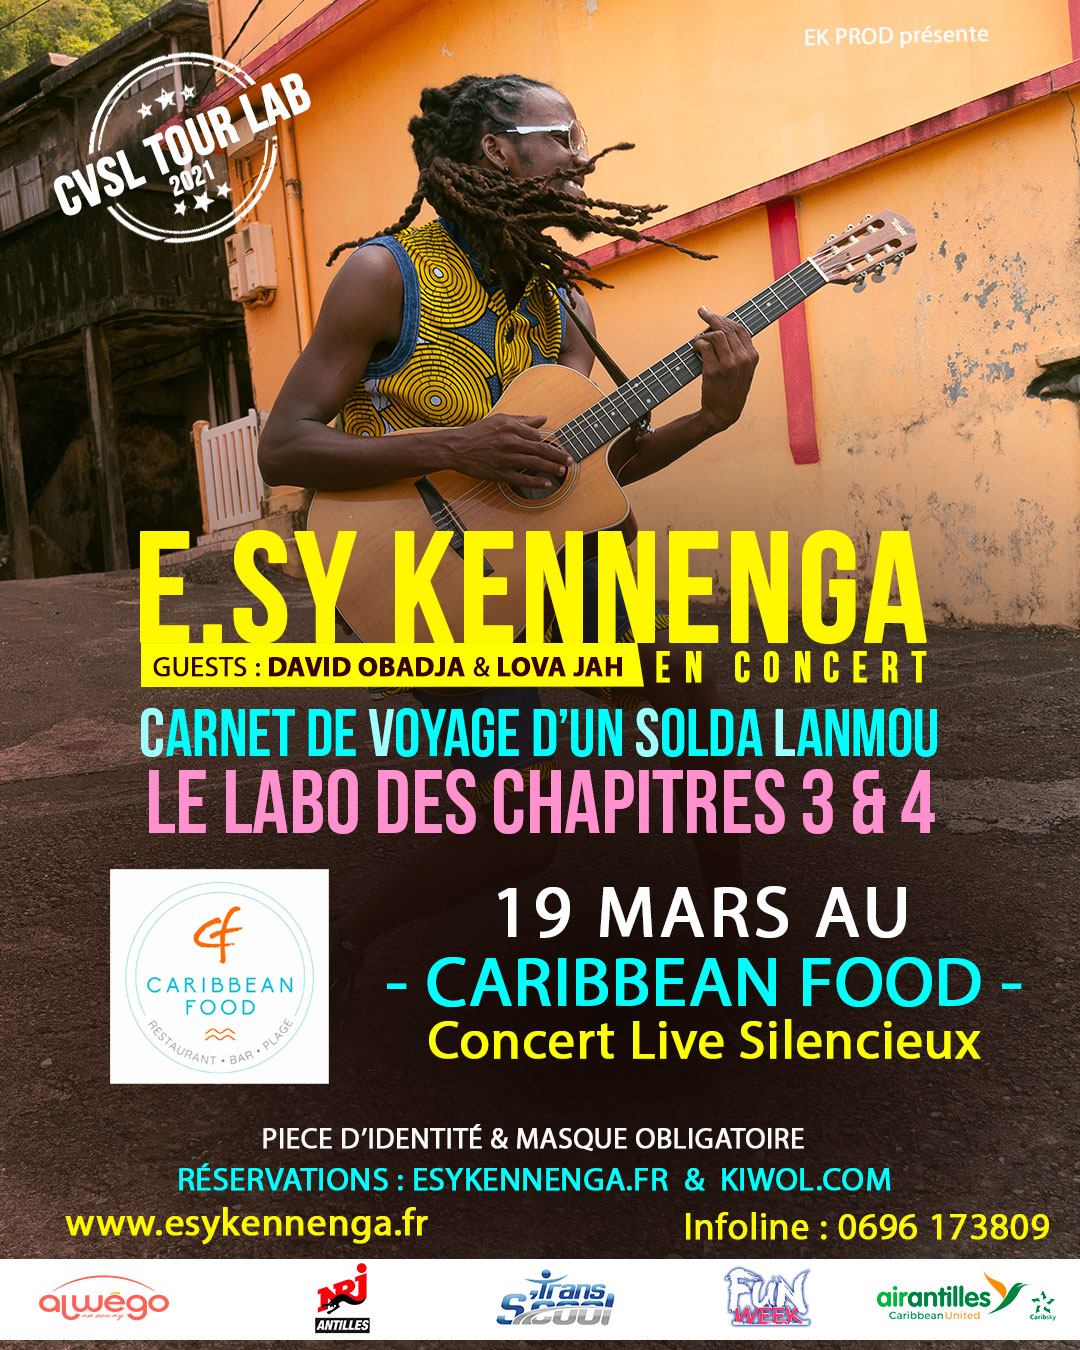 E.SY KENNENGA - CARIBBEAN FOOD STE LUCE - CONCERT LIVE SILENCIEUX - #EK20ANS - CVSL TOUR LAB 2021